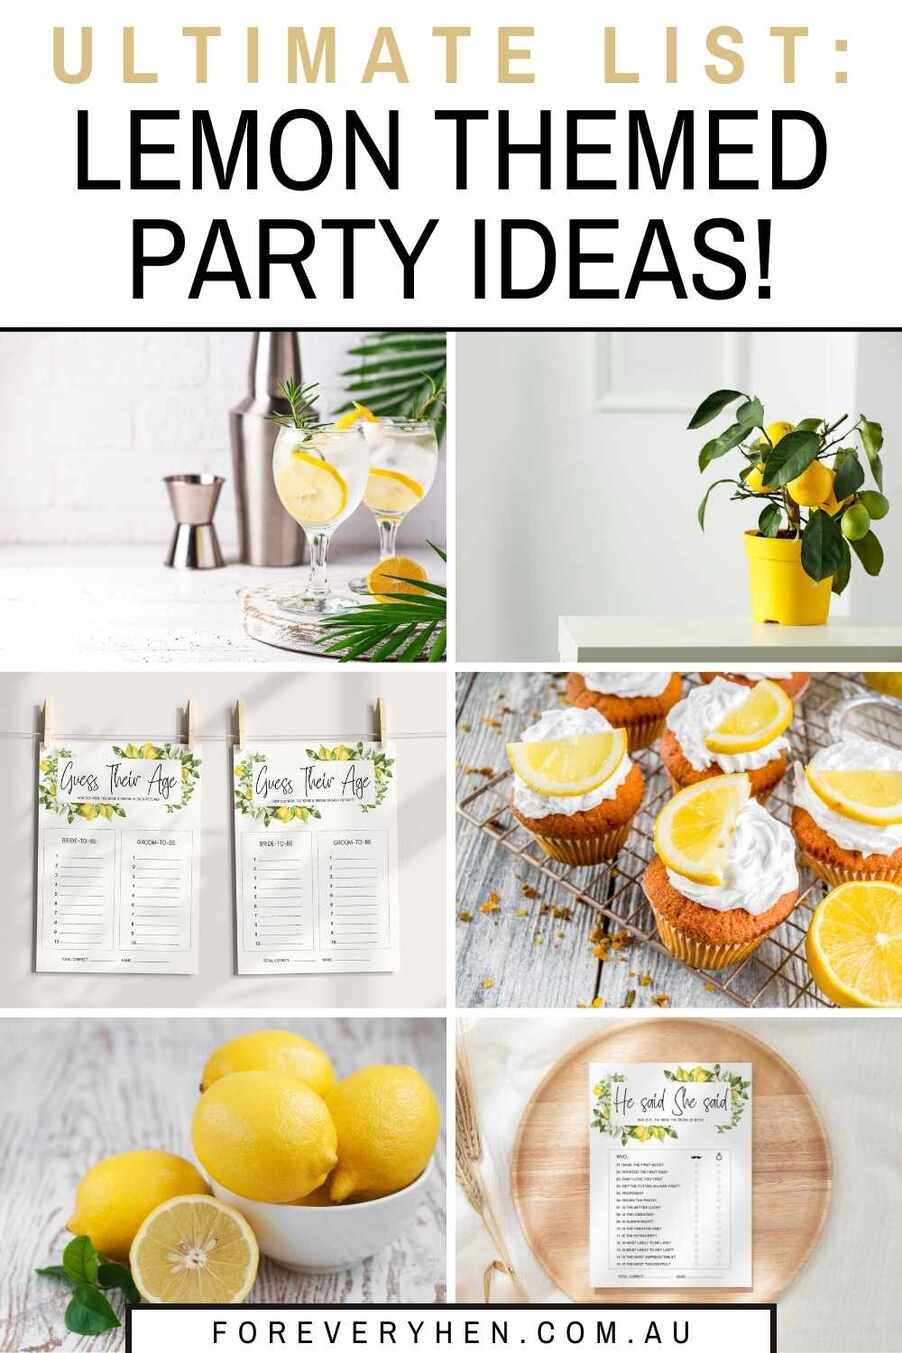 Collage of lemon drinks, lemon themed printables, a small lemon tree, and lemons in a bowl. Text overlay: Ultimate list - lemon themed party ideas!